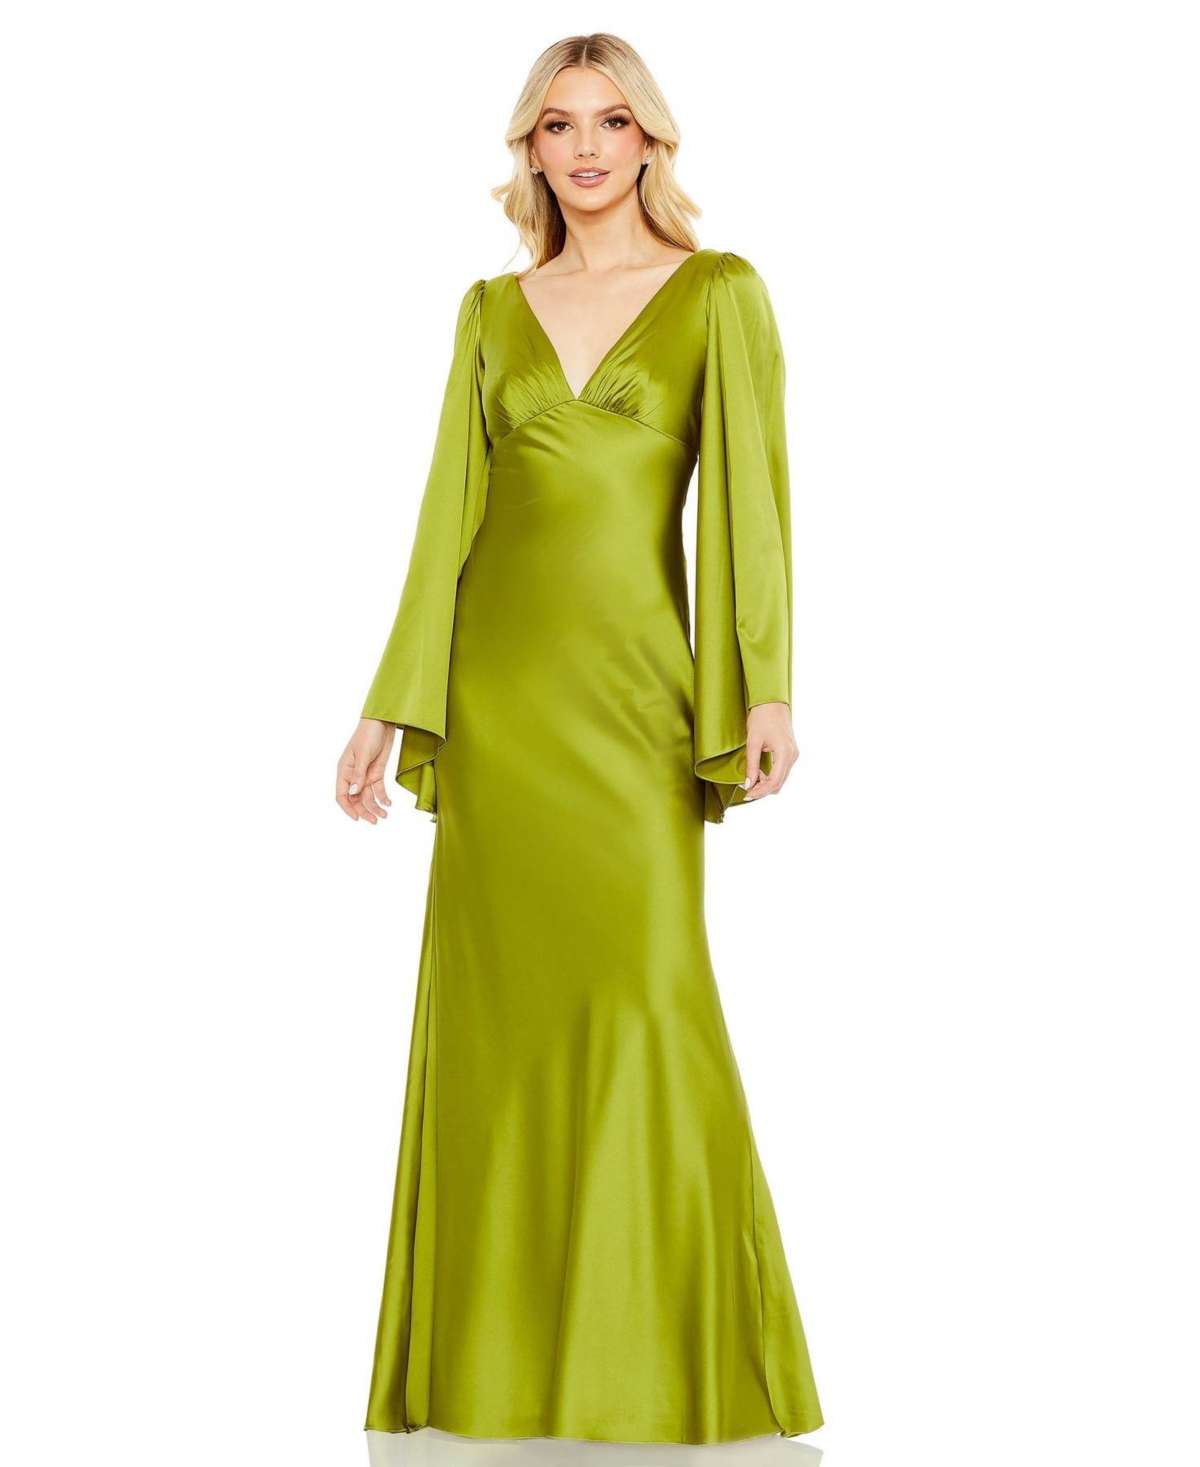 Women's Charmeuse Bell Sleeve Empire Waist Gown - Apple green